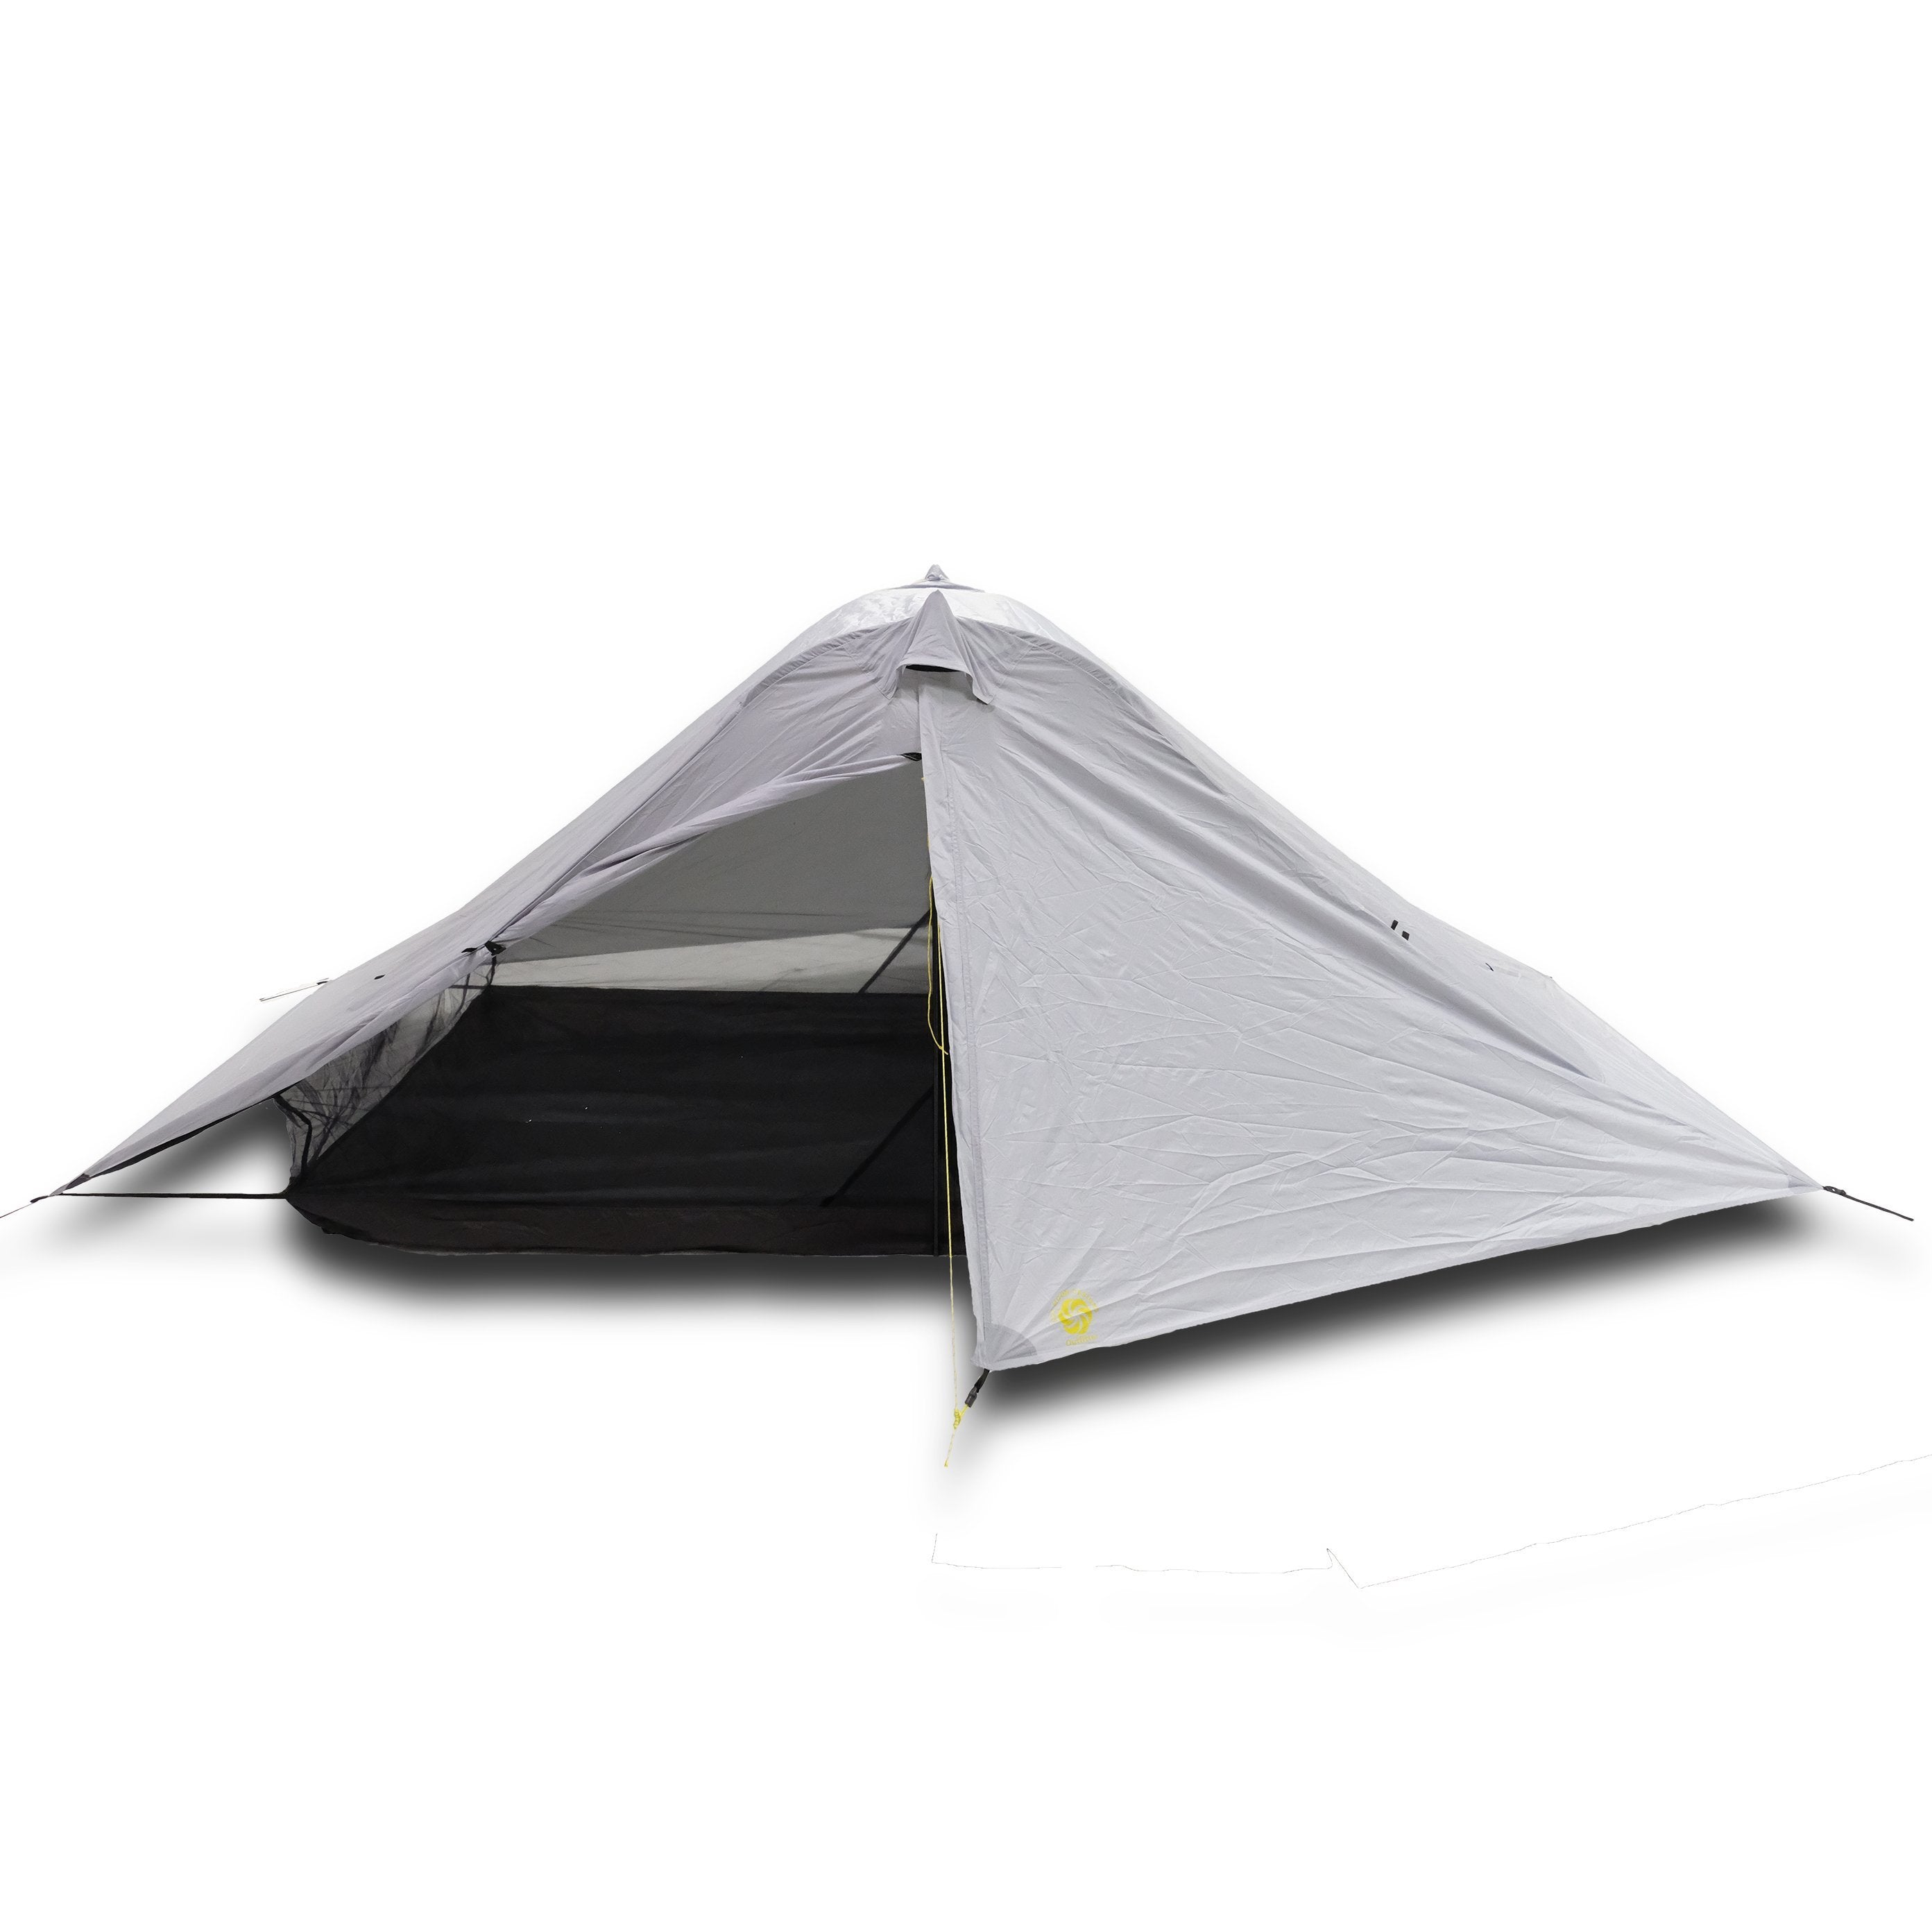 All Ultralight Tents - Six Moon Designs